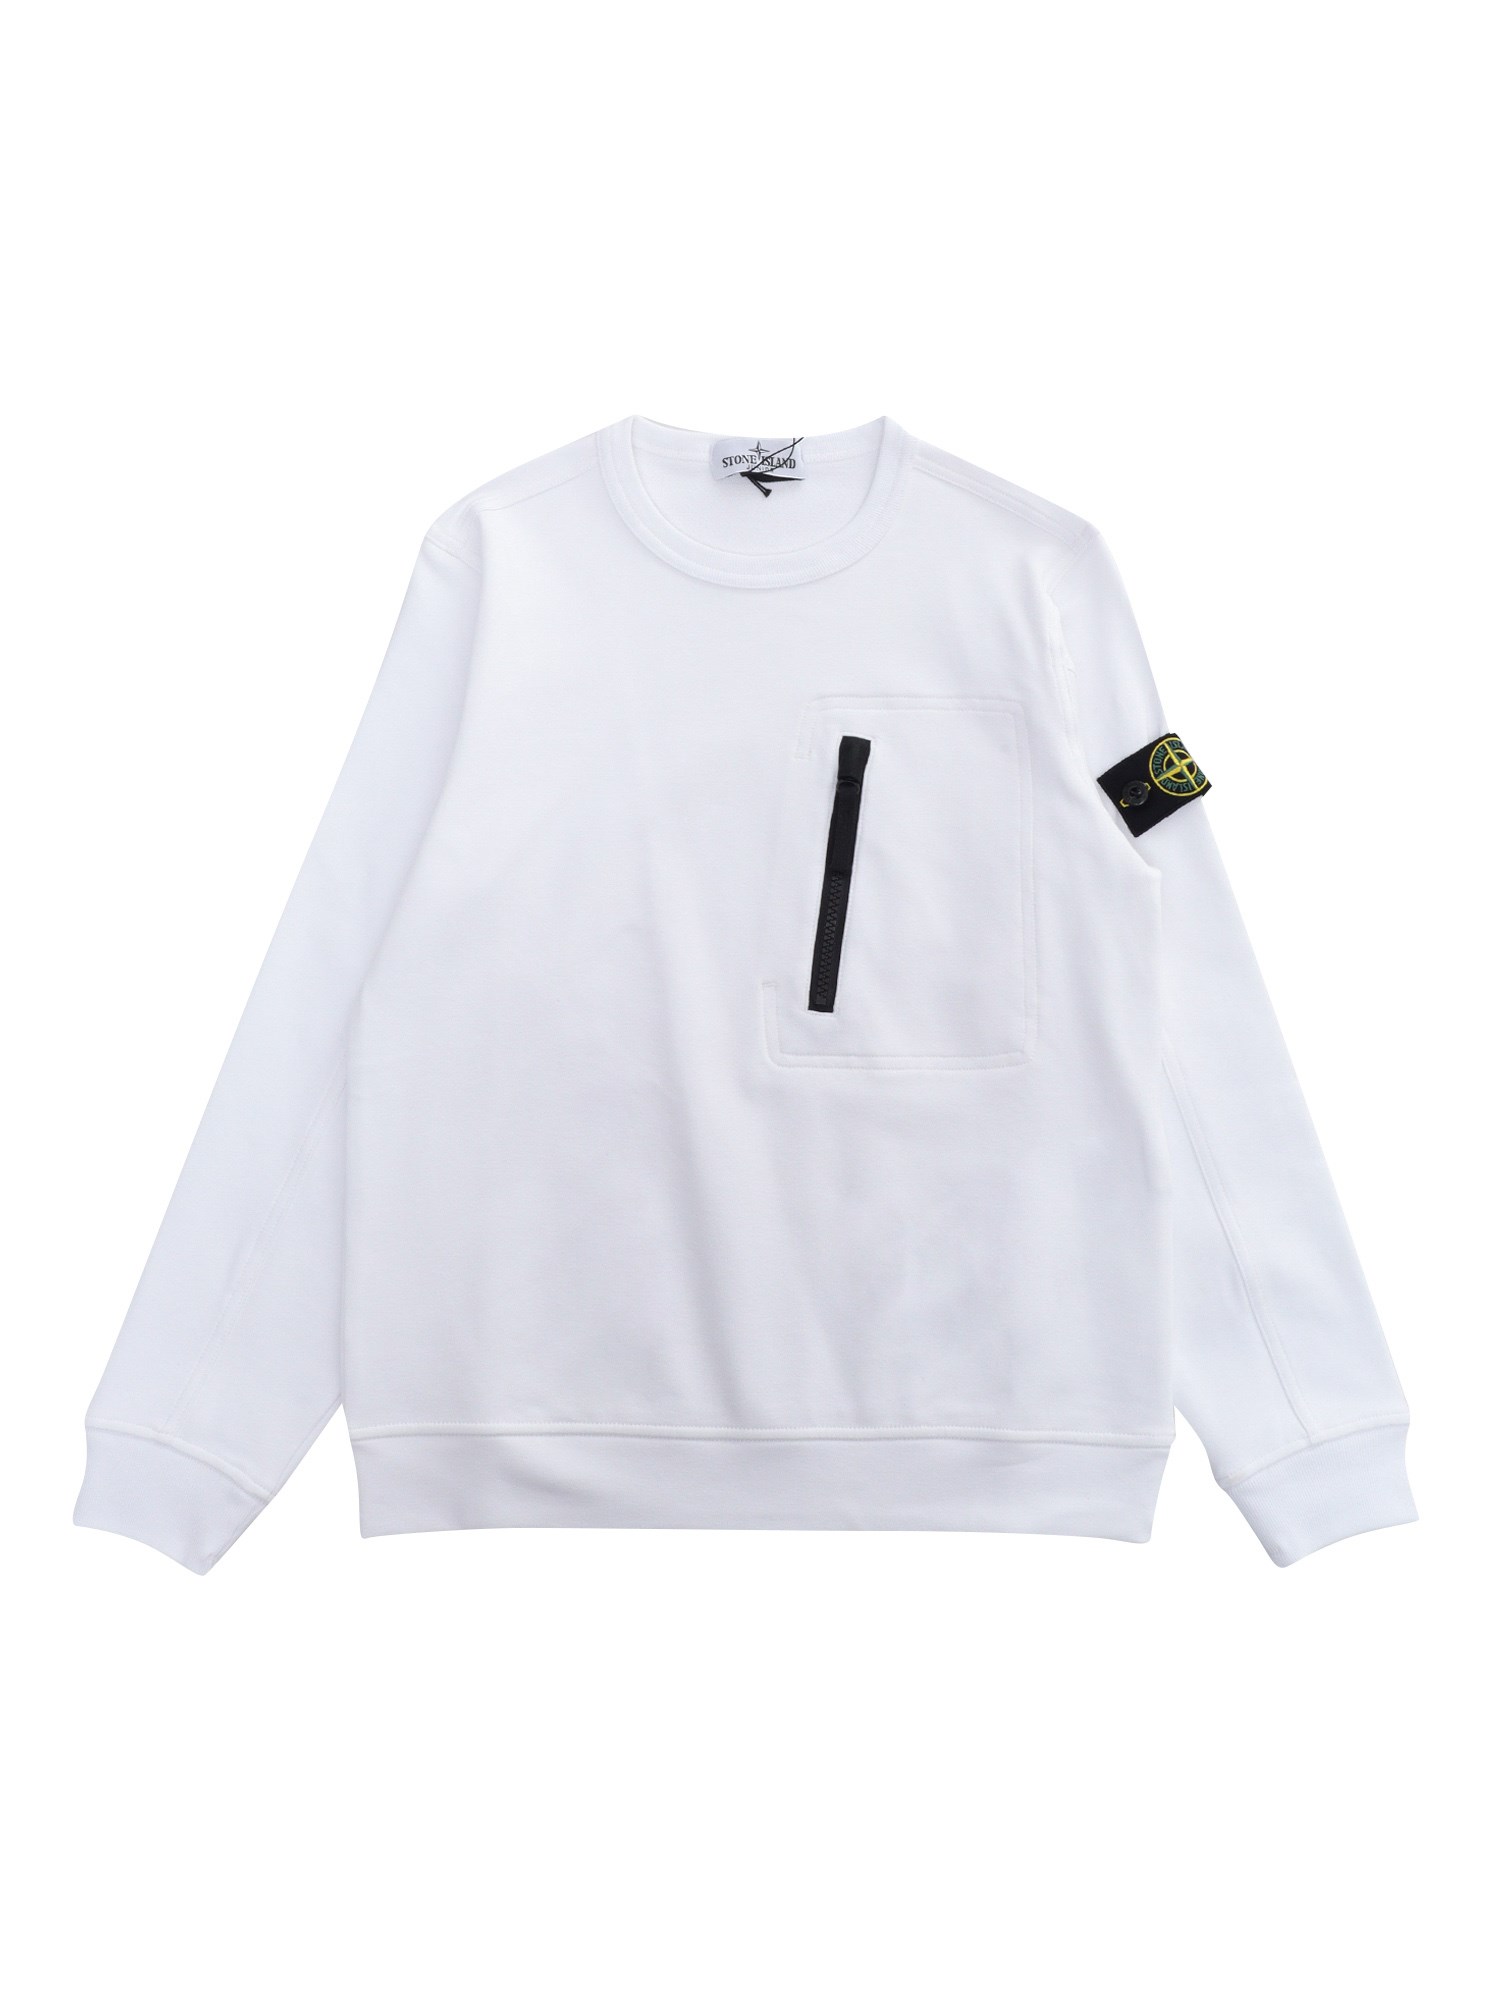 Stone Island White Sweatshirt With Pockets